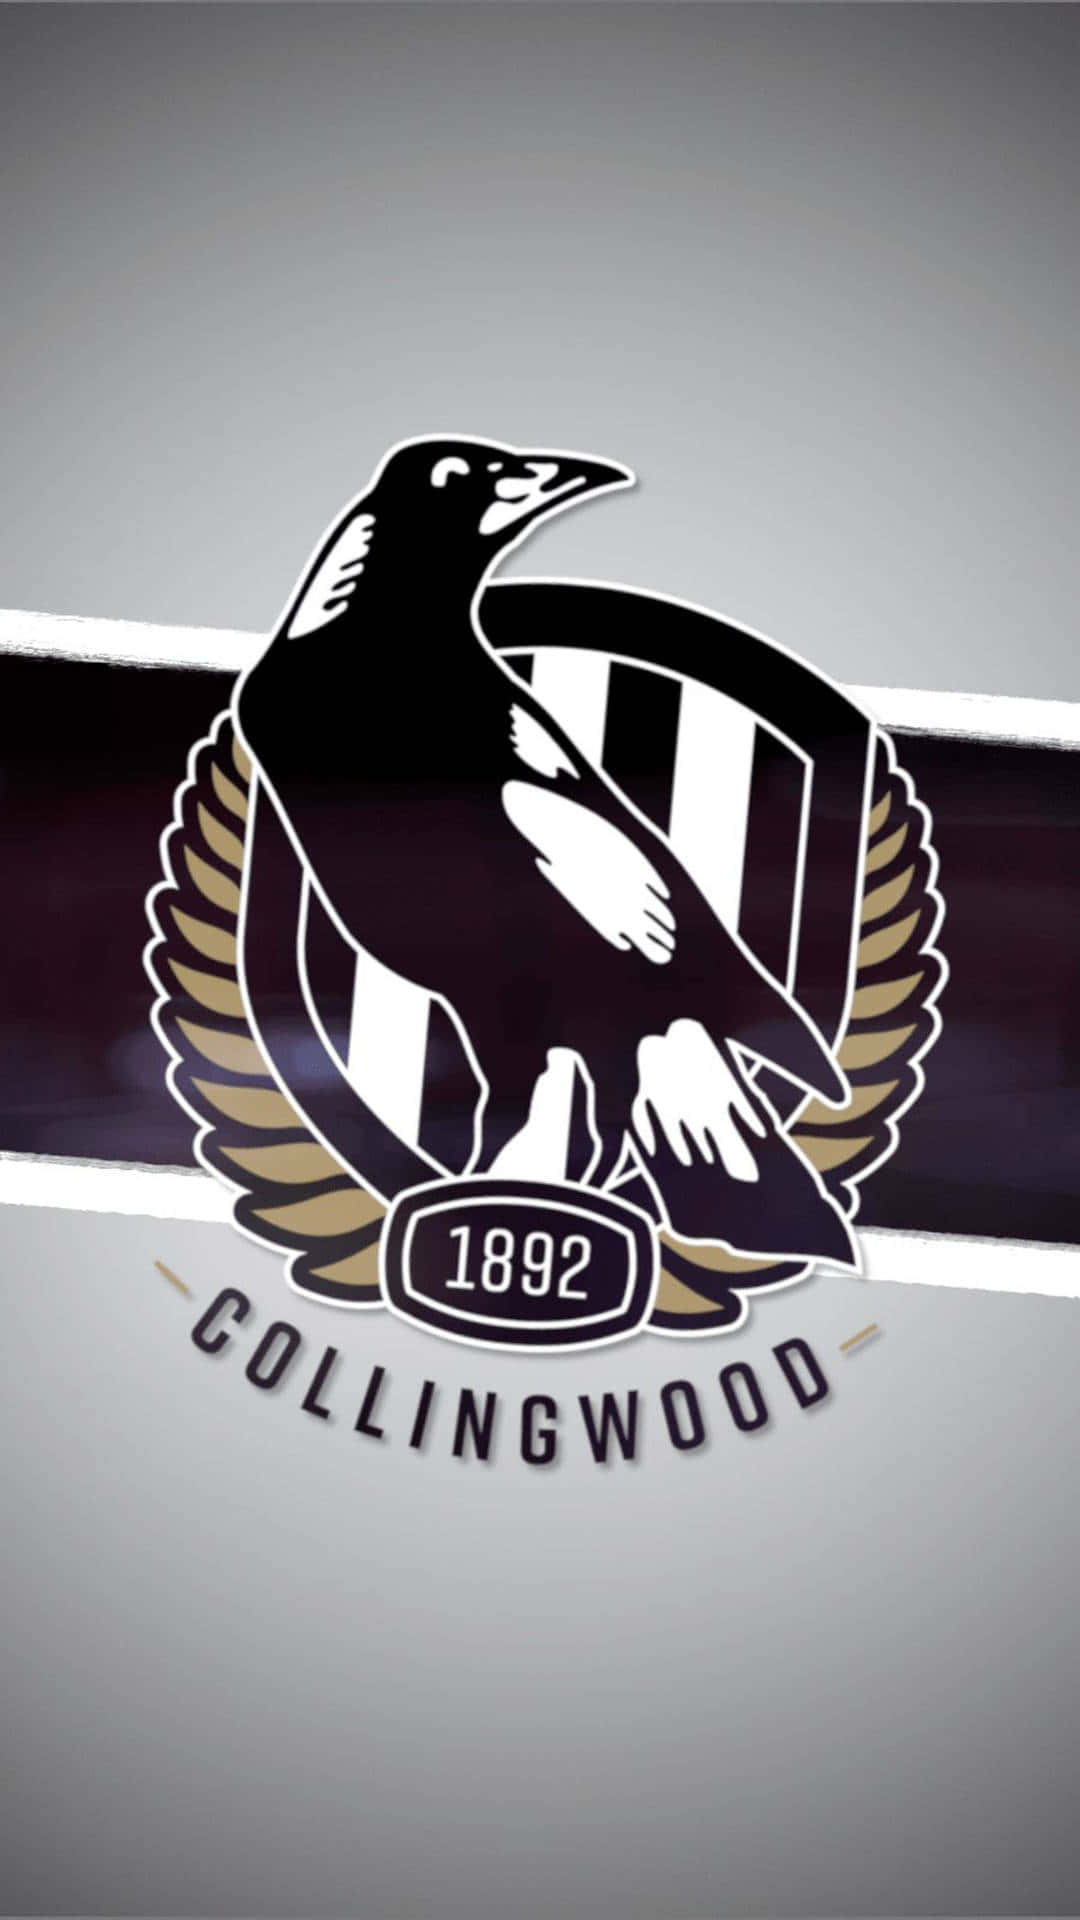 Collingwoodfc-logo